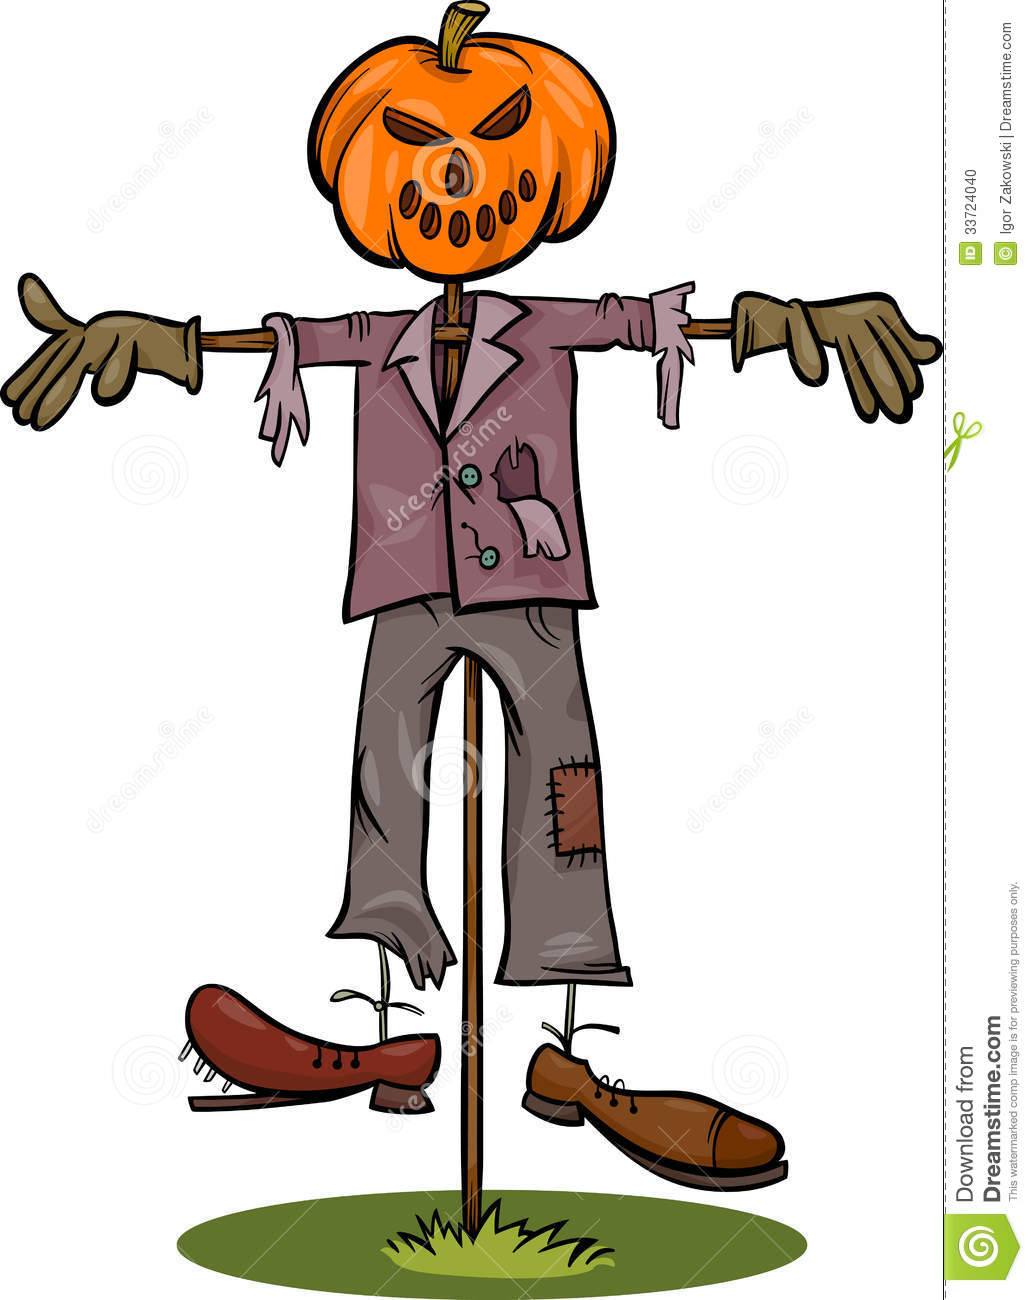 Halloween Scarecrow Cartoon Illustration Stock Photo   Image  33724040